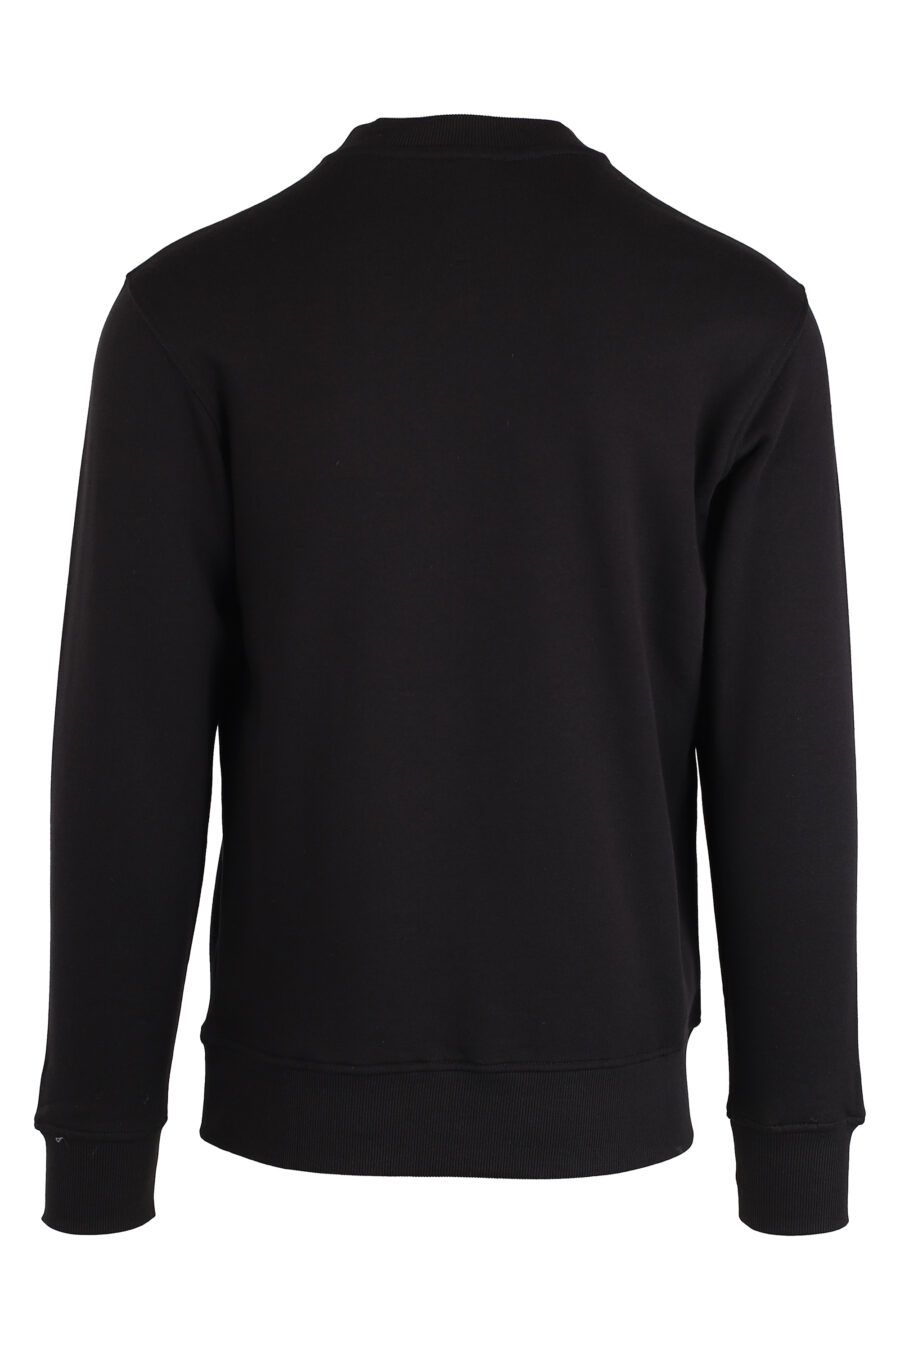 Black sweatshirt with silver stamp logo - IMG 4143